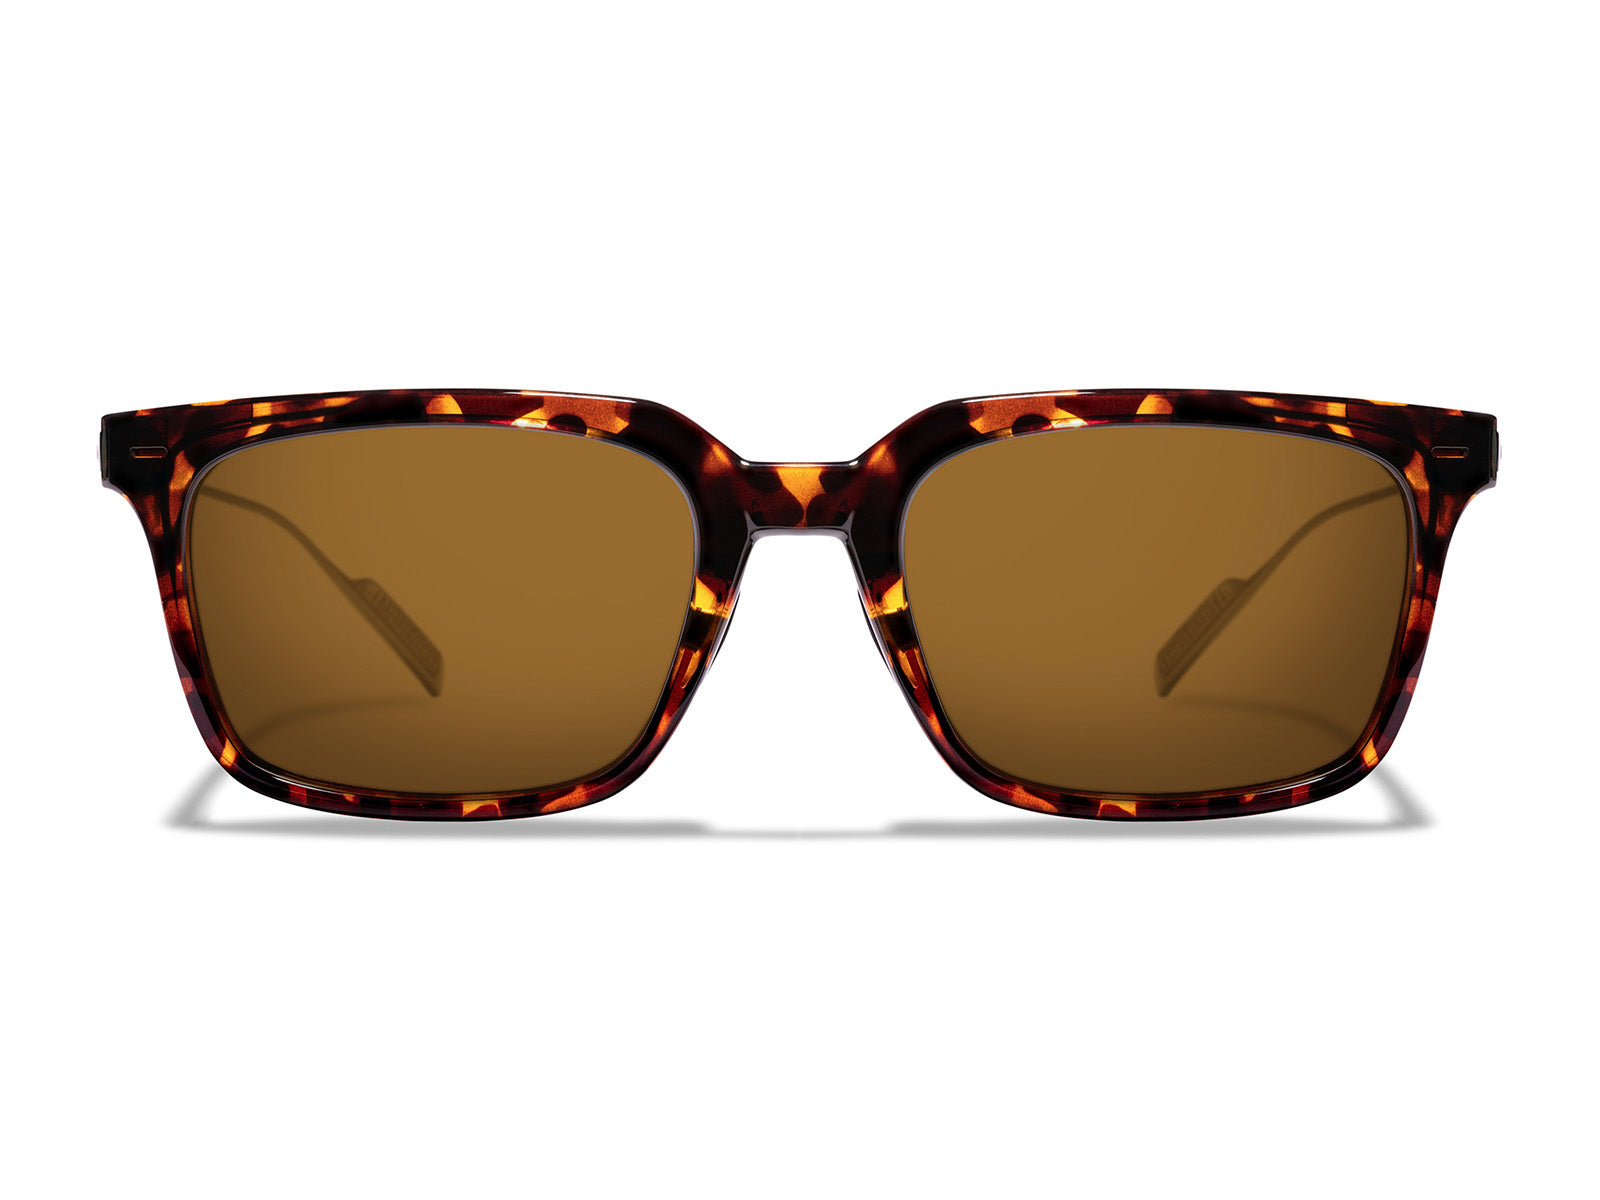 Roka Barton, Ultra Lightweight Sunglasses, Rectangular Shape